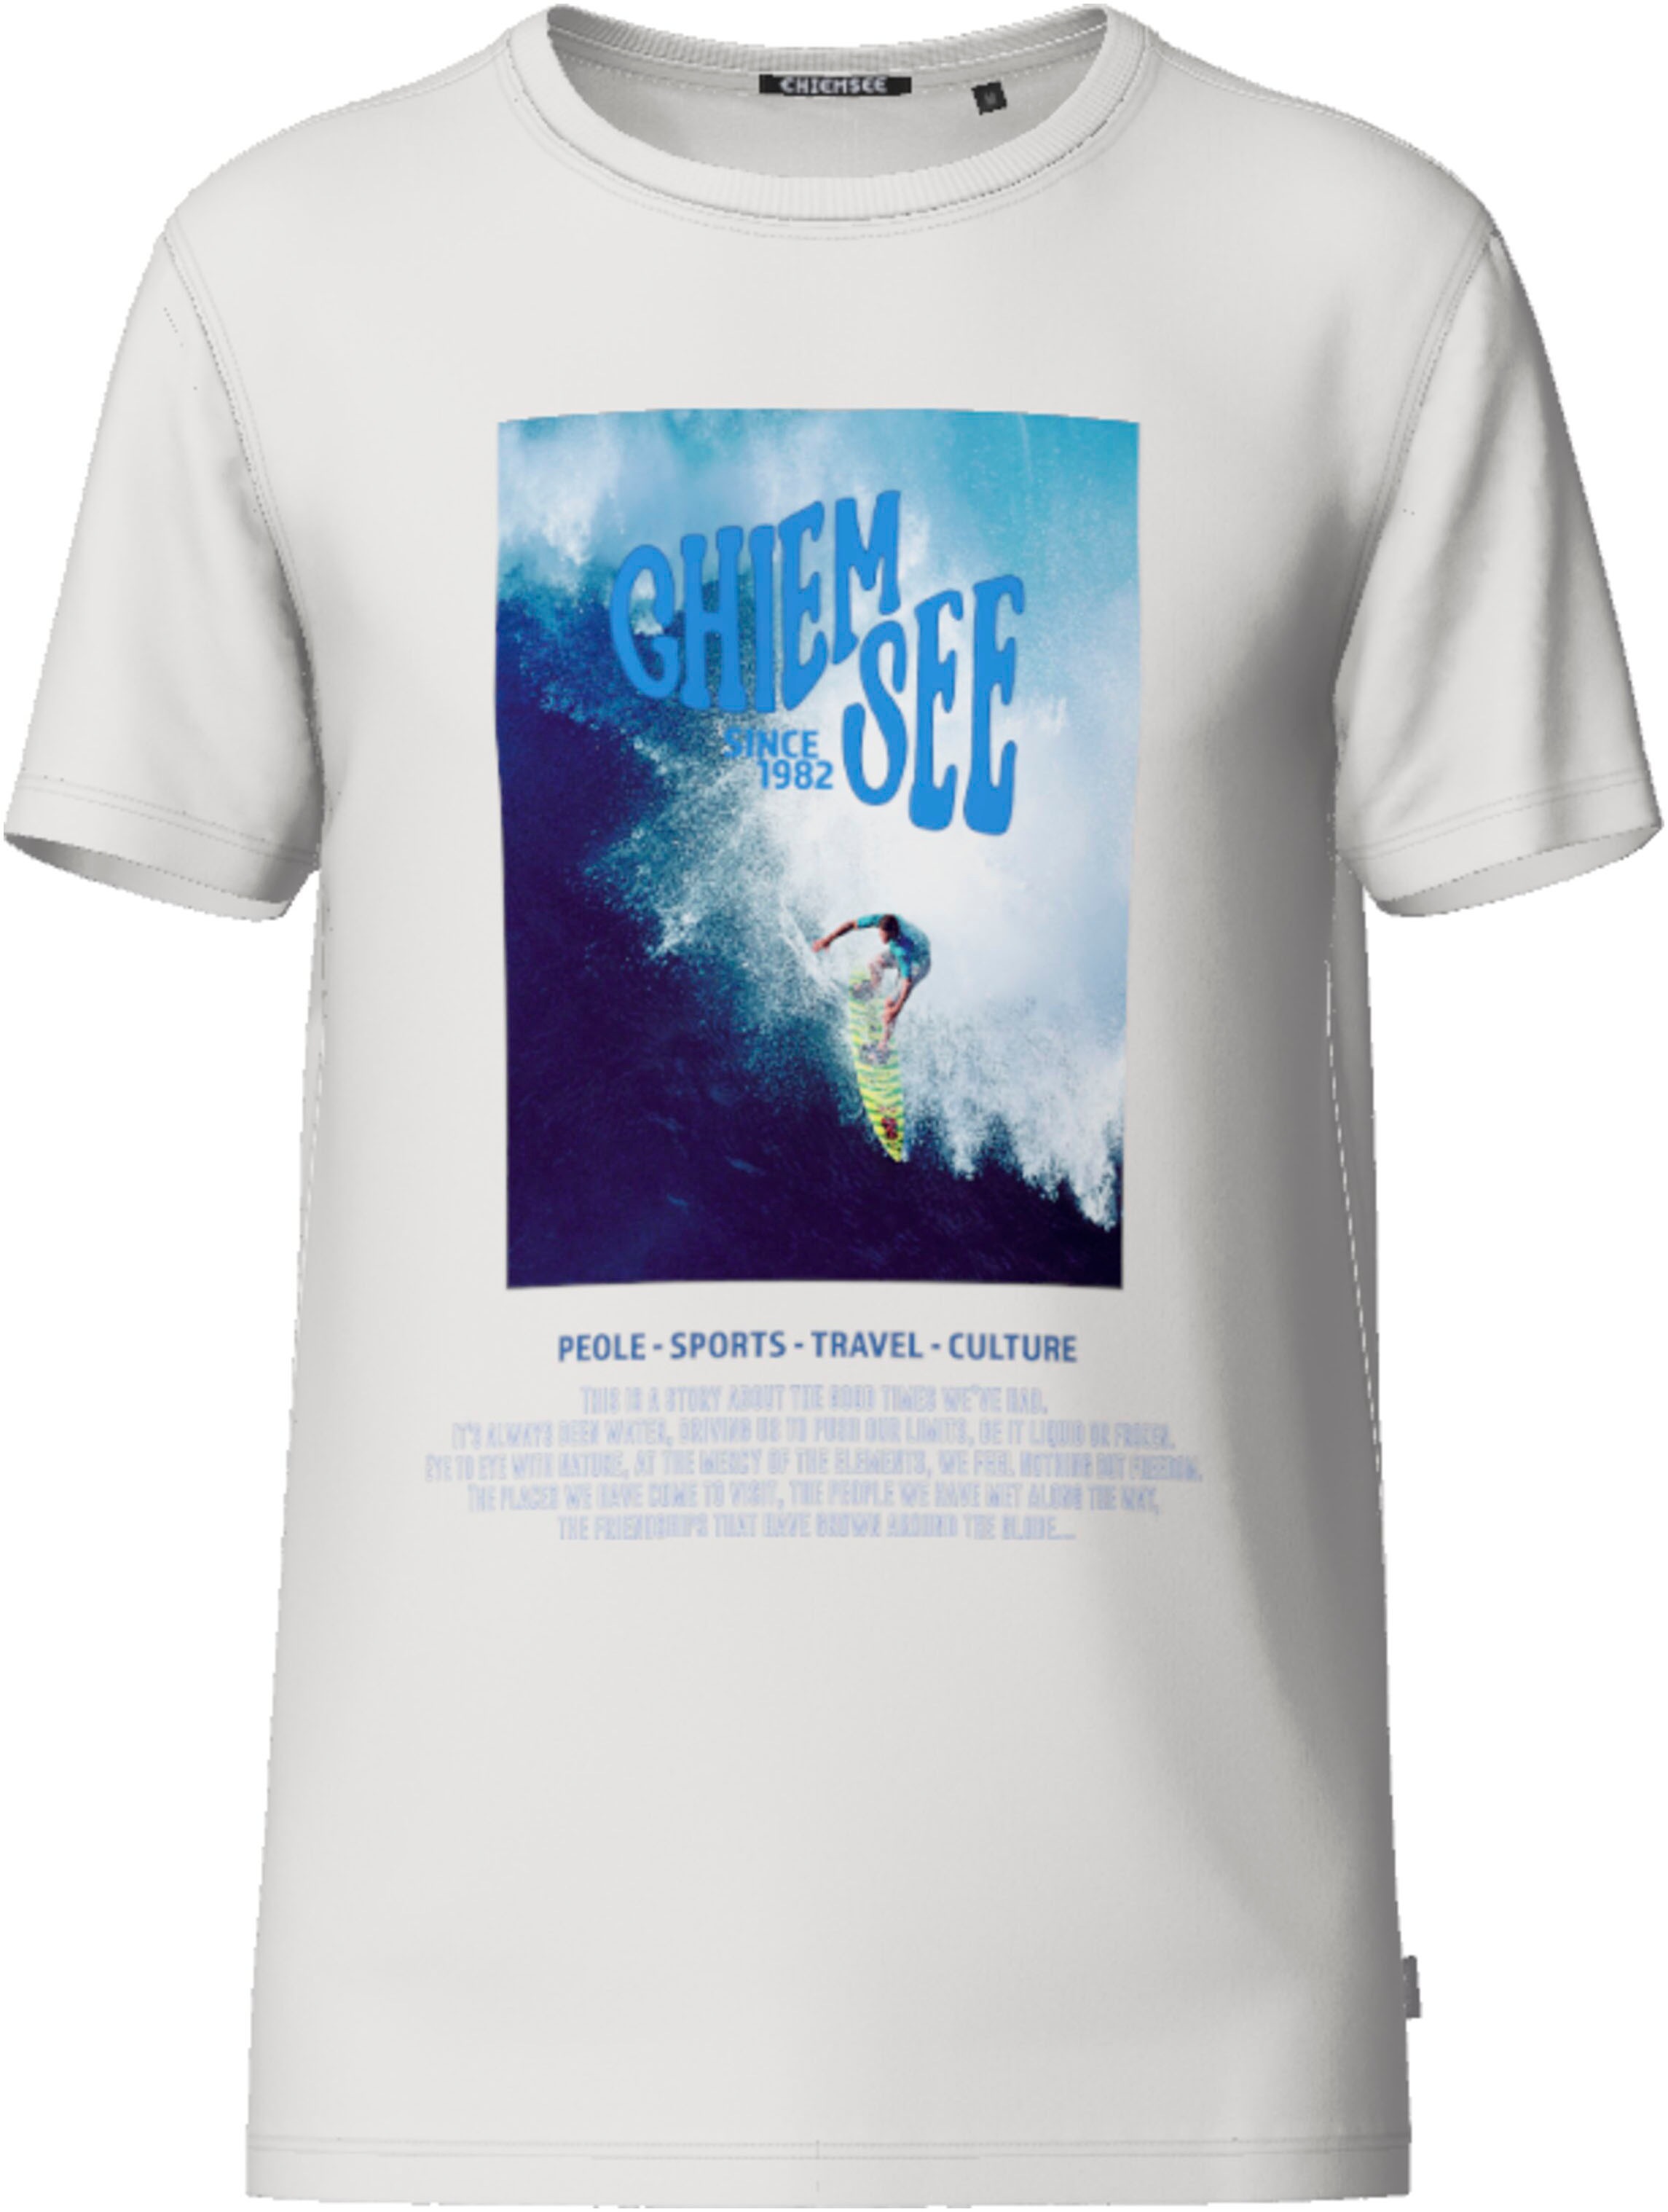 shoppen Chiemsee online OTTO bei T-Shirt